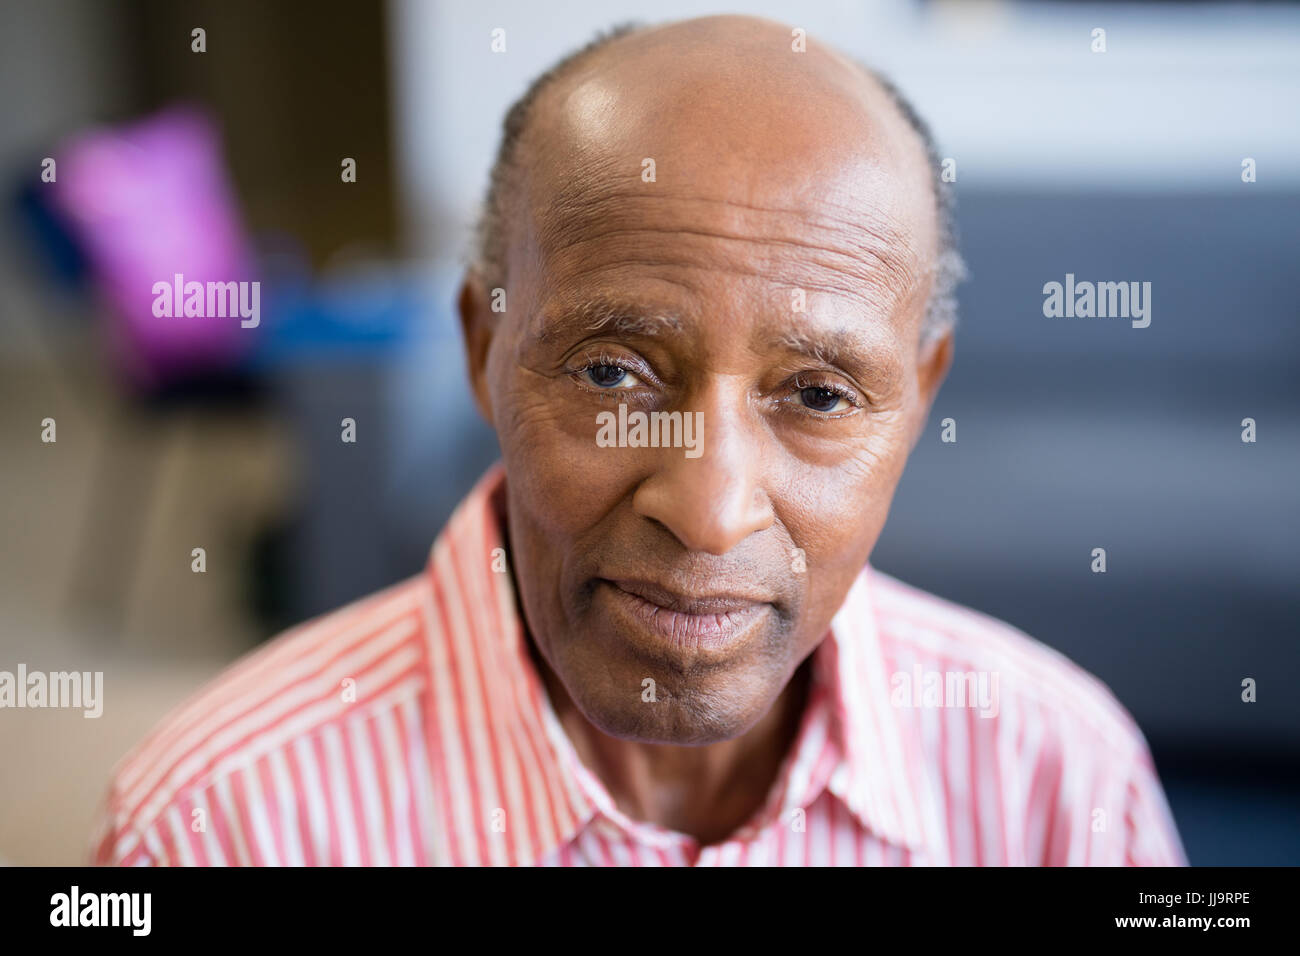 Portrait of senior man with receding hairline at nursing home Stock Photo